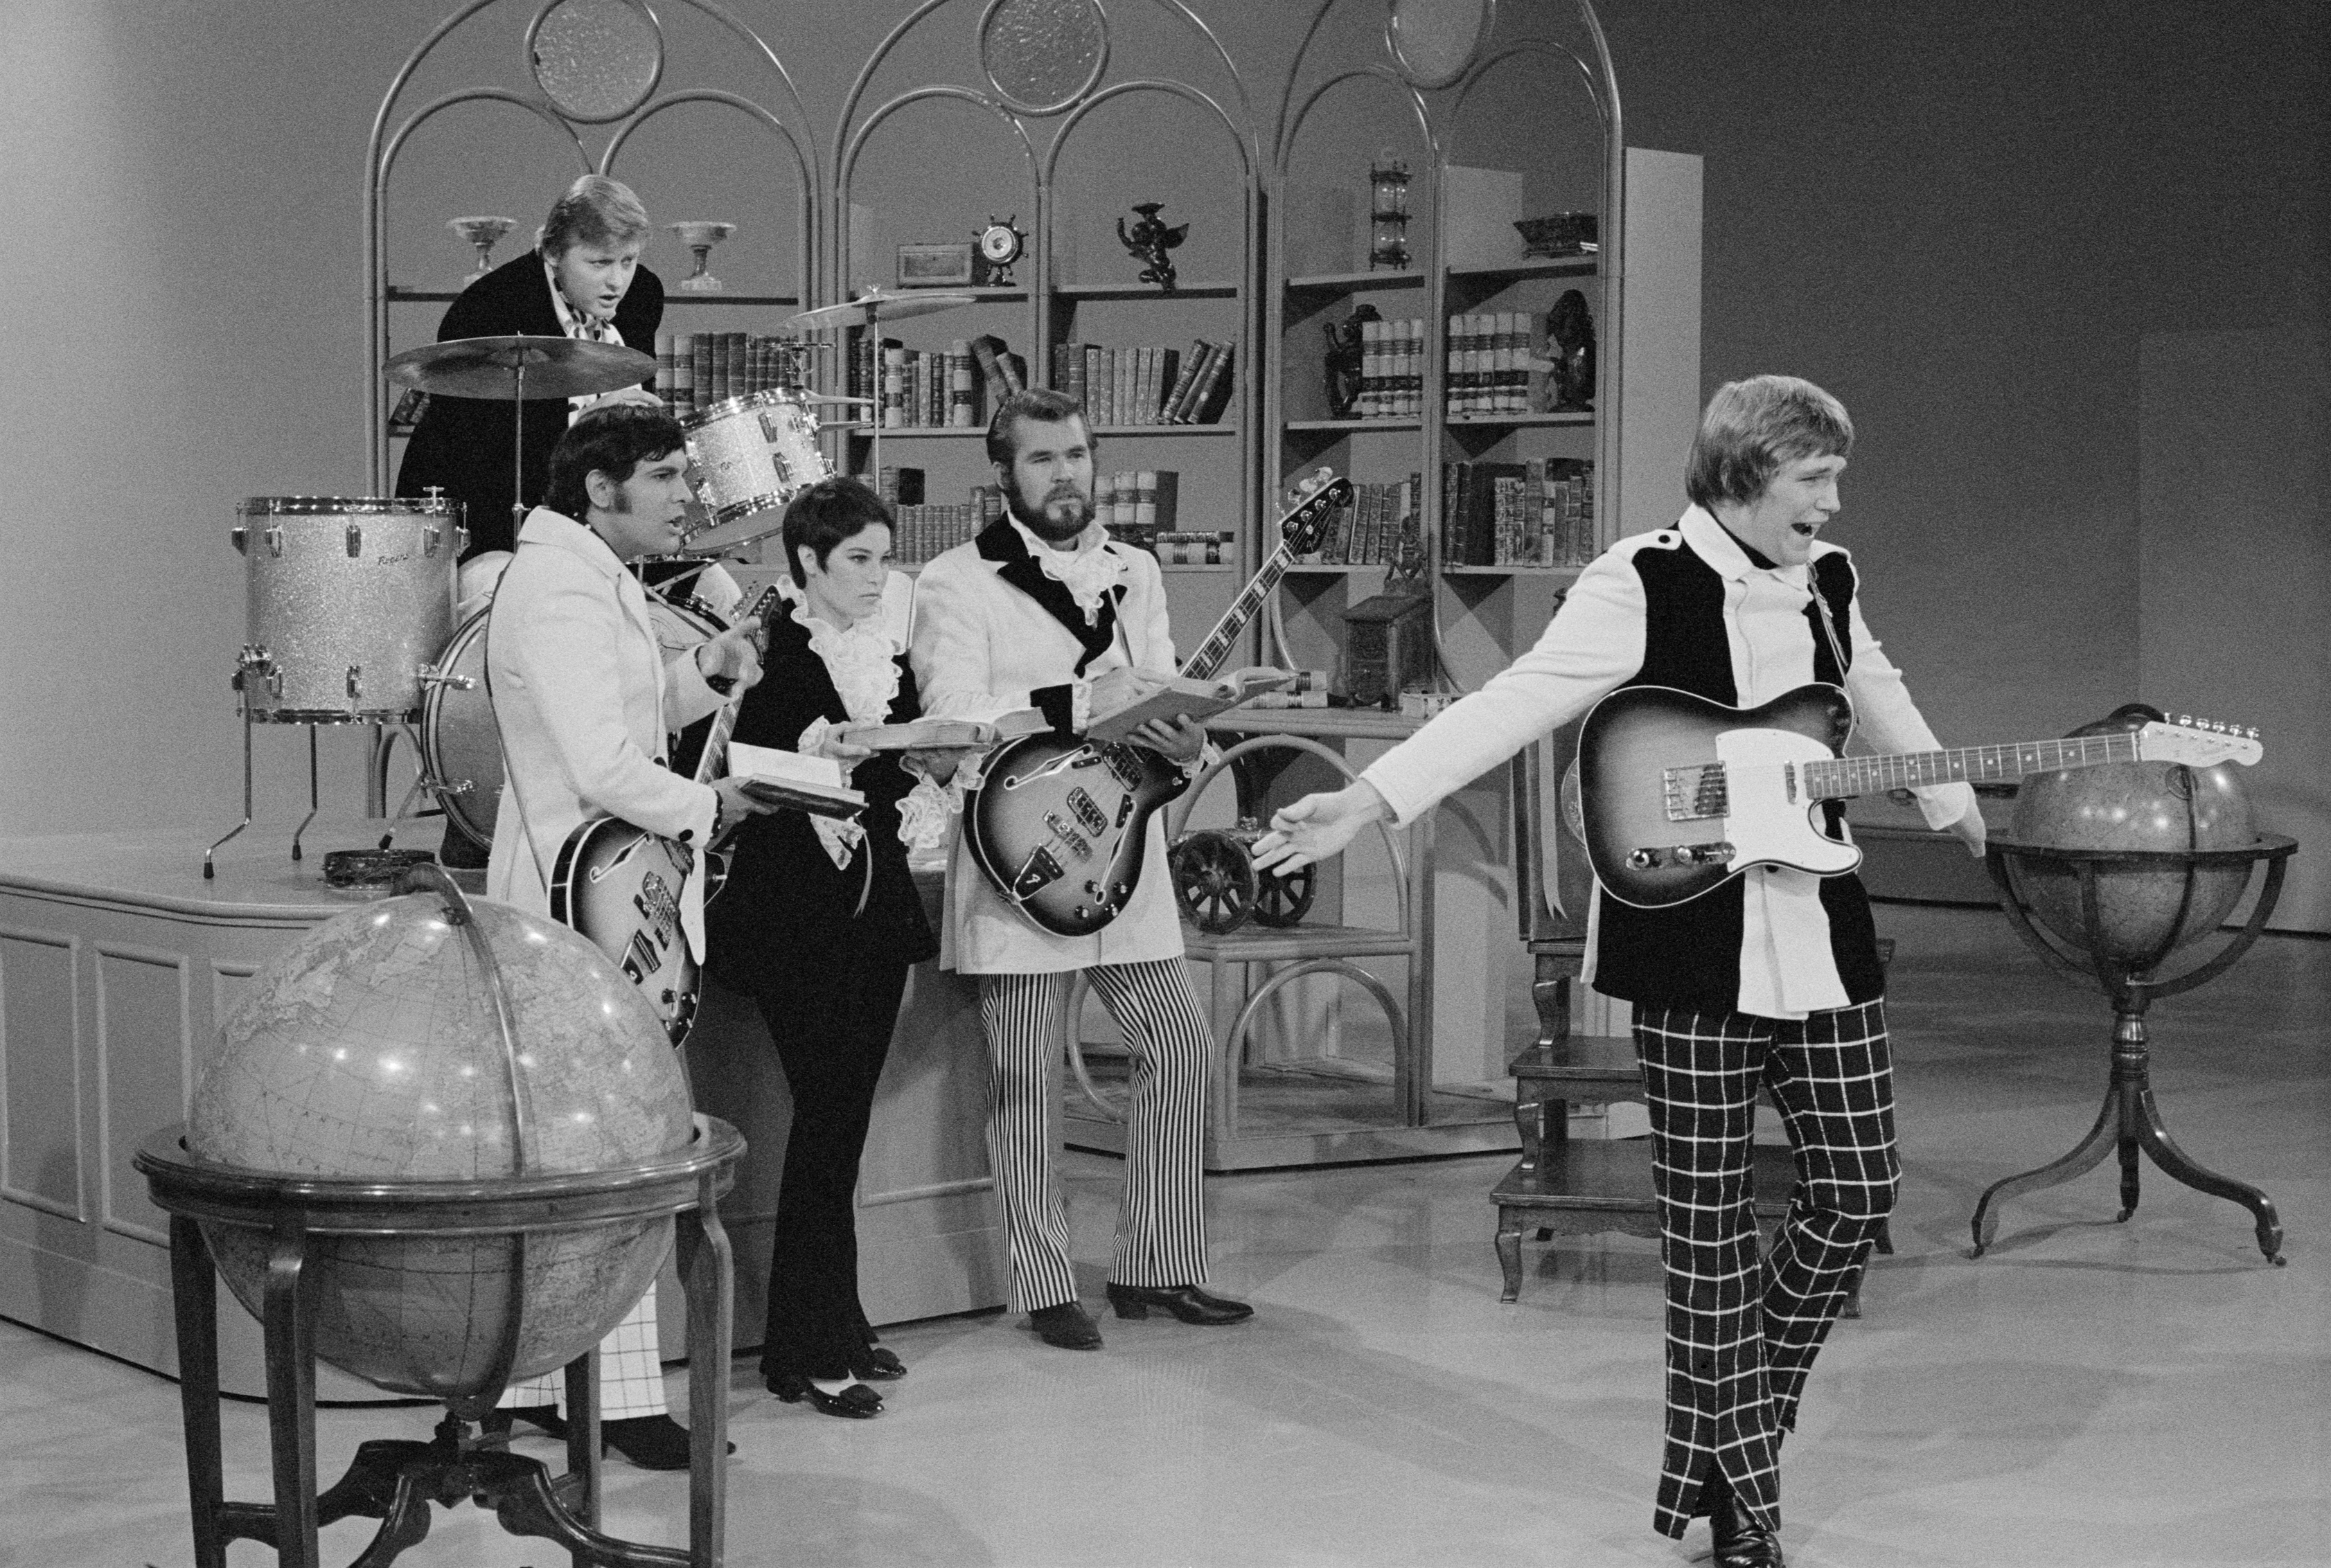 Der verstorbene Sänger und seine Band The First Edition traten am 29. September 1967 in der "The Smothers Brothers Comedy Hour" auf | Quelle: Getty Images